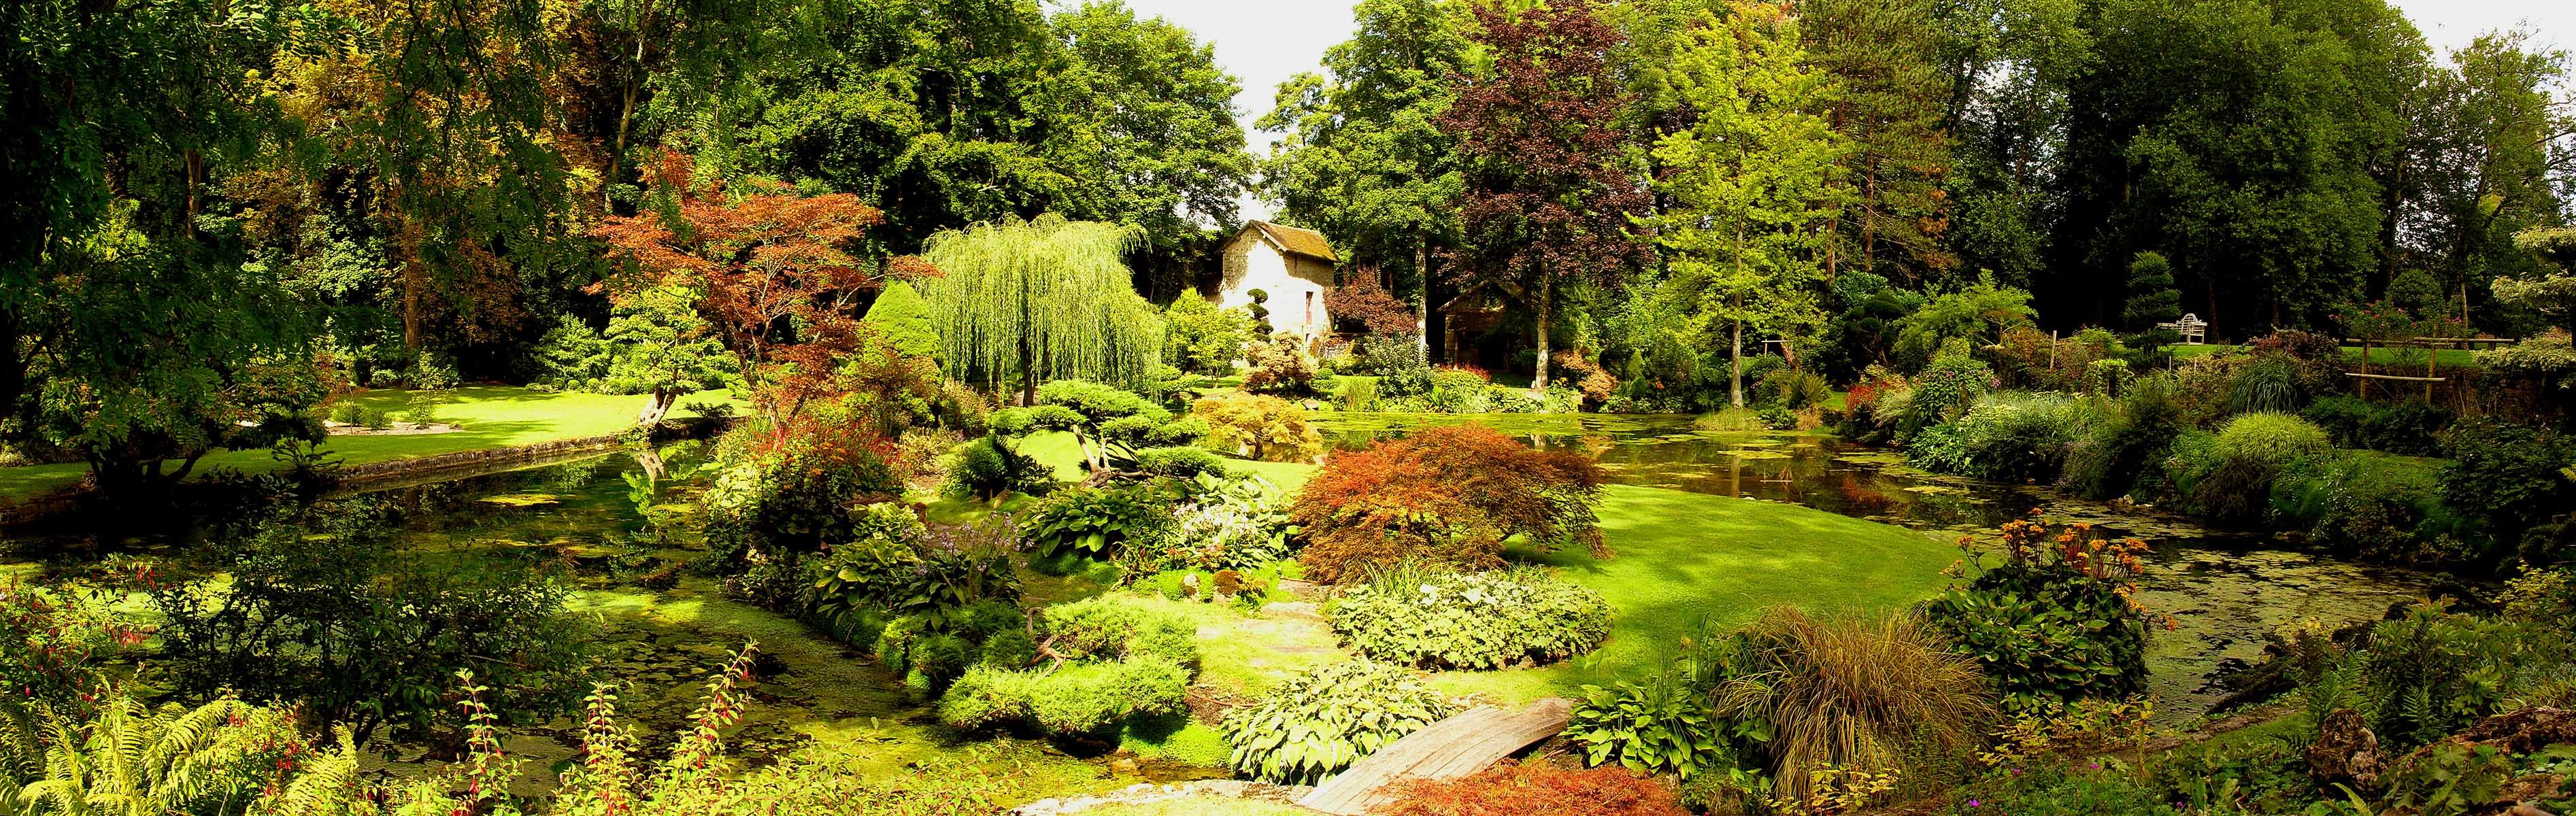 Japaneese garden - Castle of Courances - France.jpg